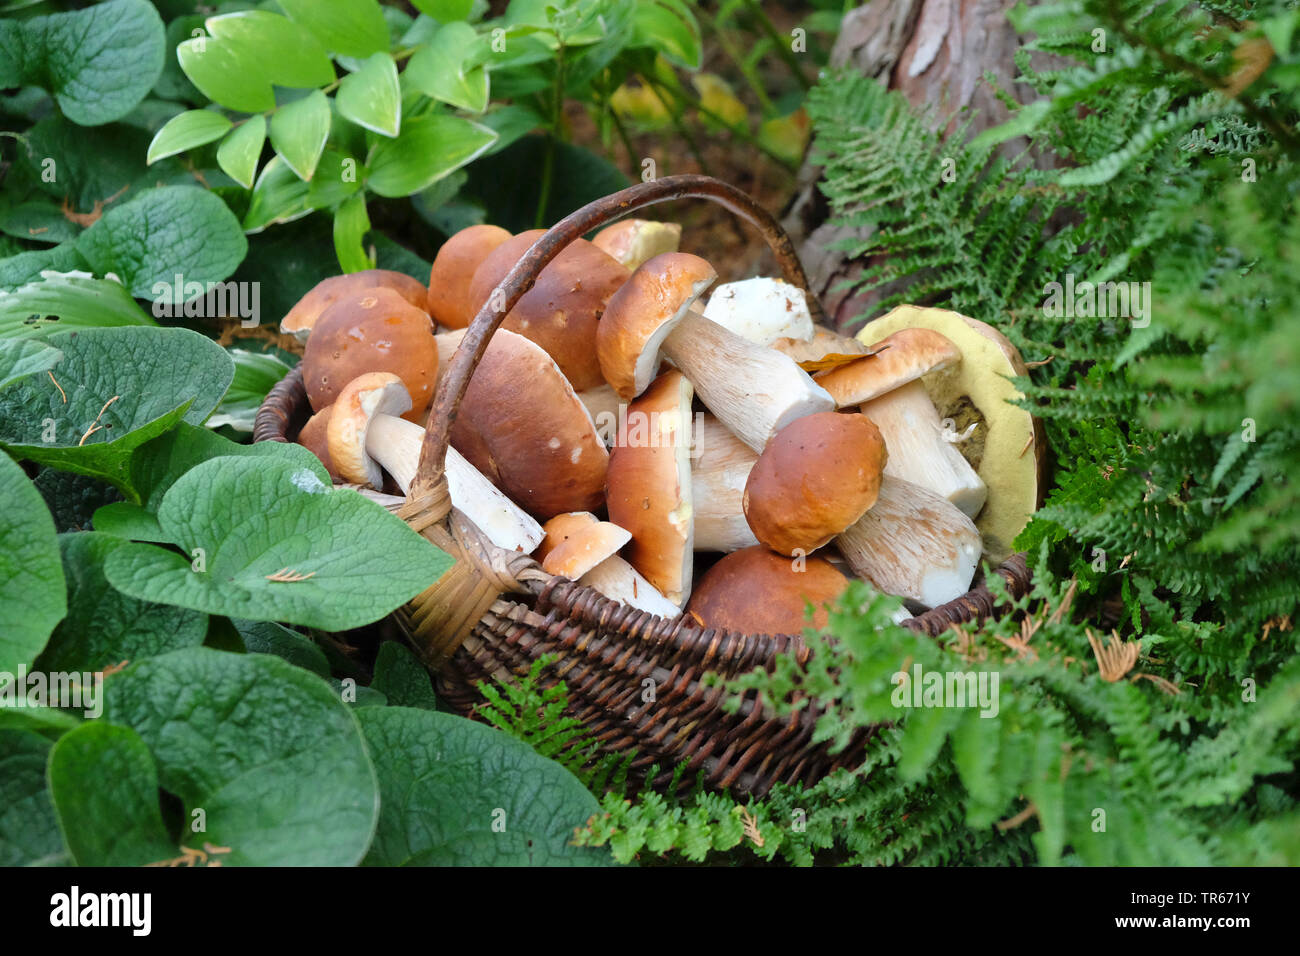 Penny bun, Cep, Porcino, Bun mushroom (Boletus edulis), Penny buns in a basket, Germany, Saxony Stock Photo